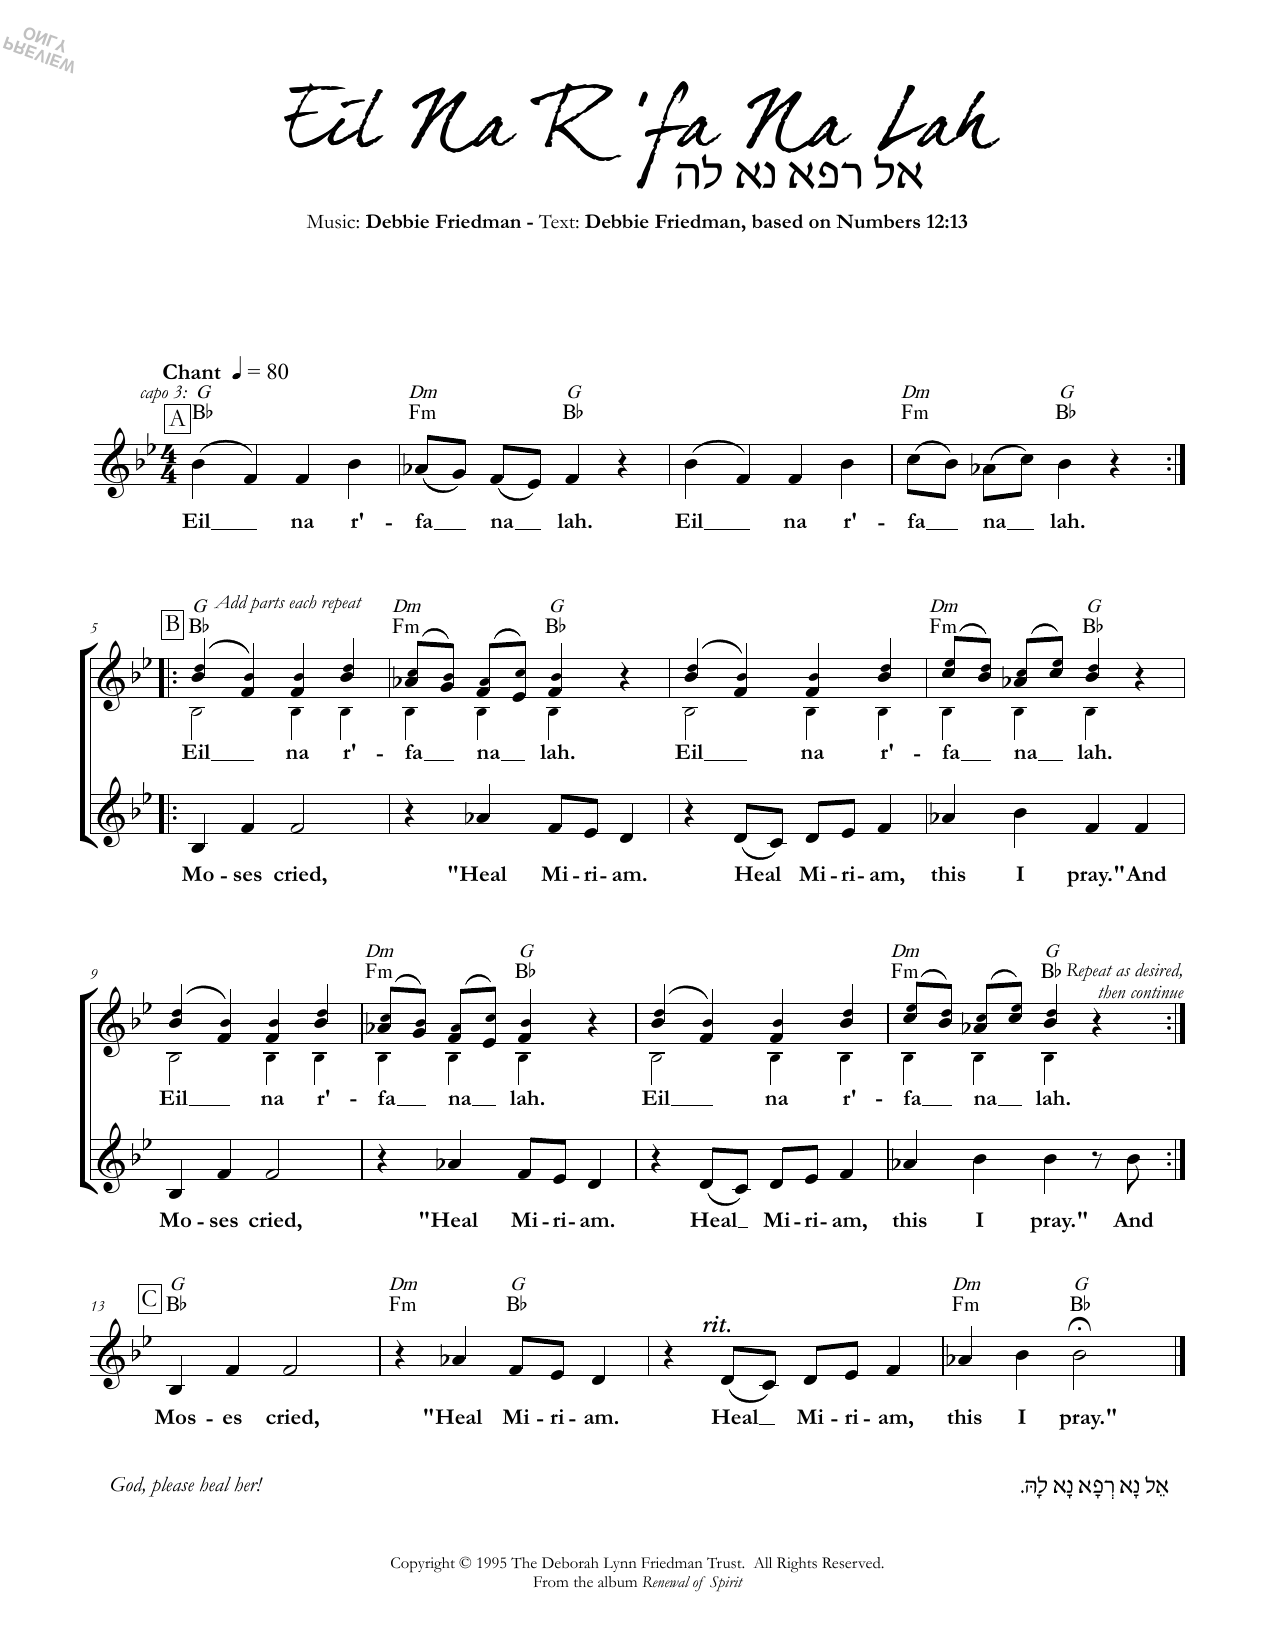 Download Debbie Friedman Eil Na R'fa Na La Sheet Music and learn how to play Lead Sheet / Fake Book PDF digital score in minutes